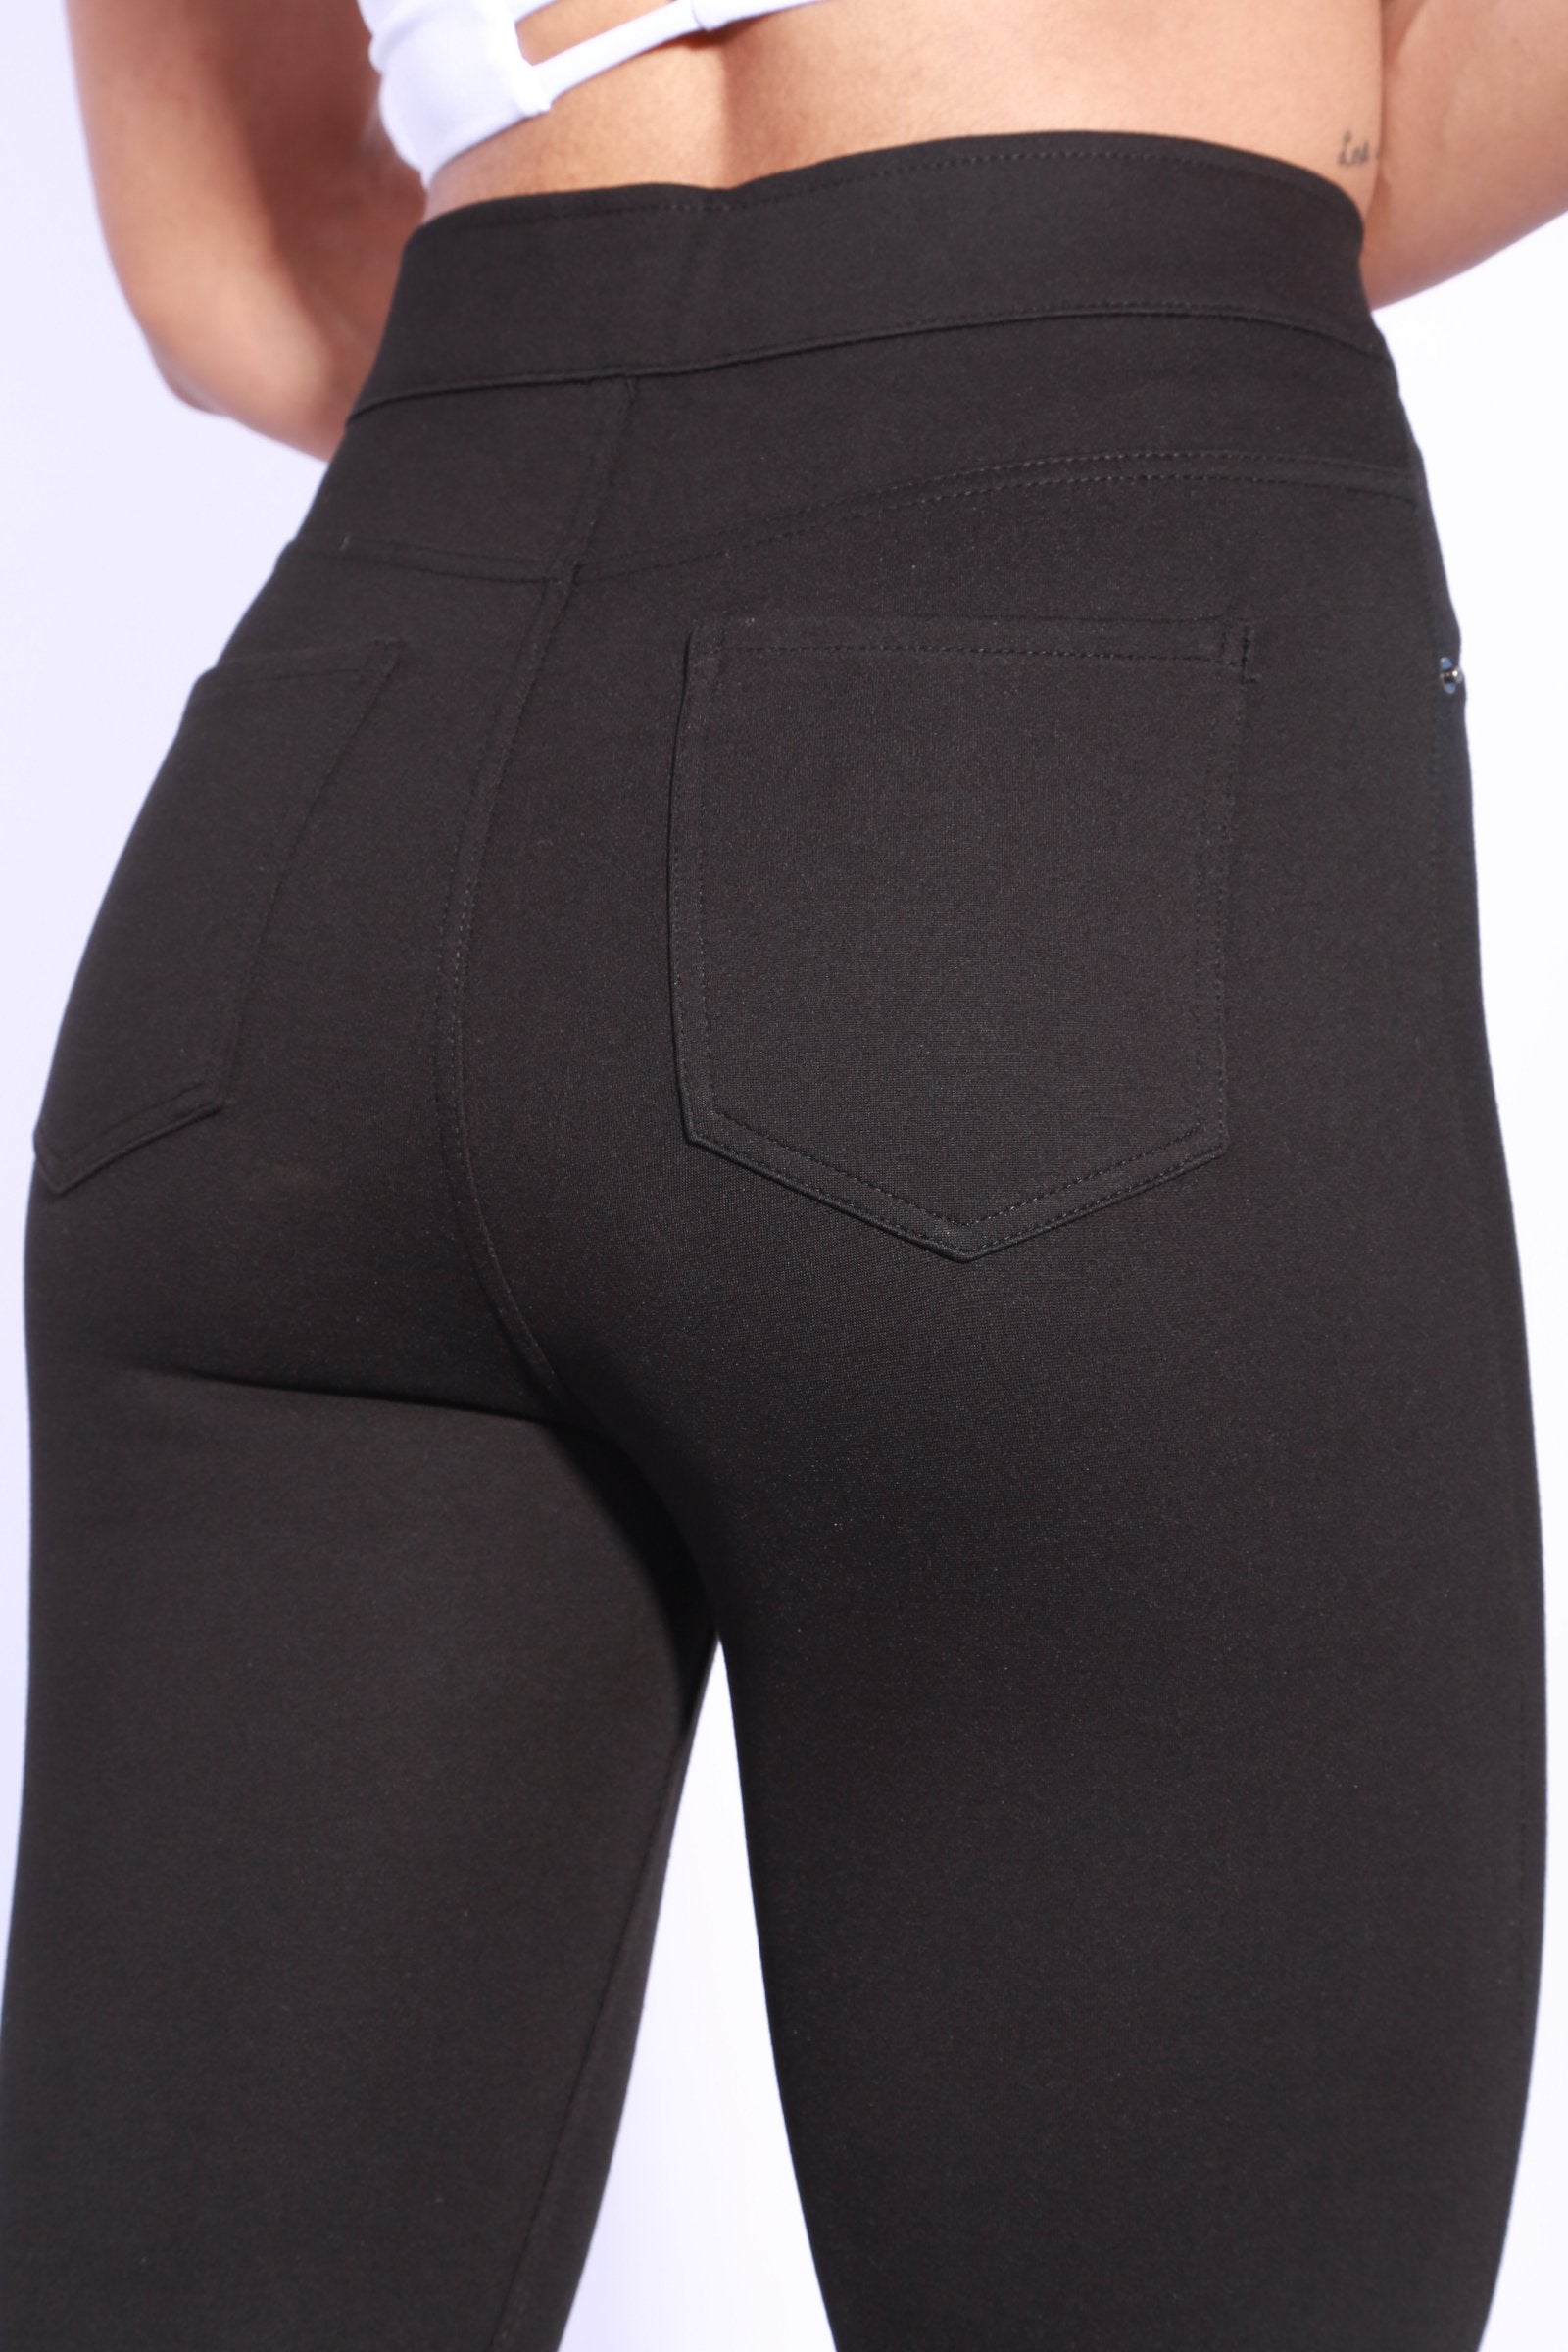 Wonderfit Cheeky AKA ‘Tik Tok Pants’ - Anti cellulite leggings - Black